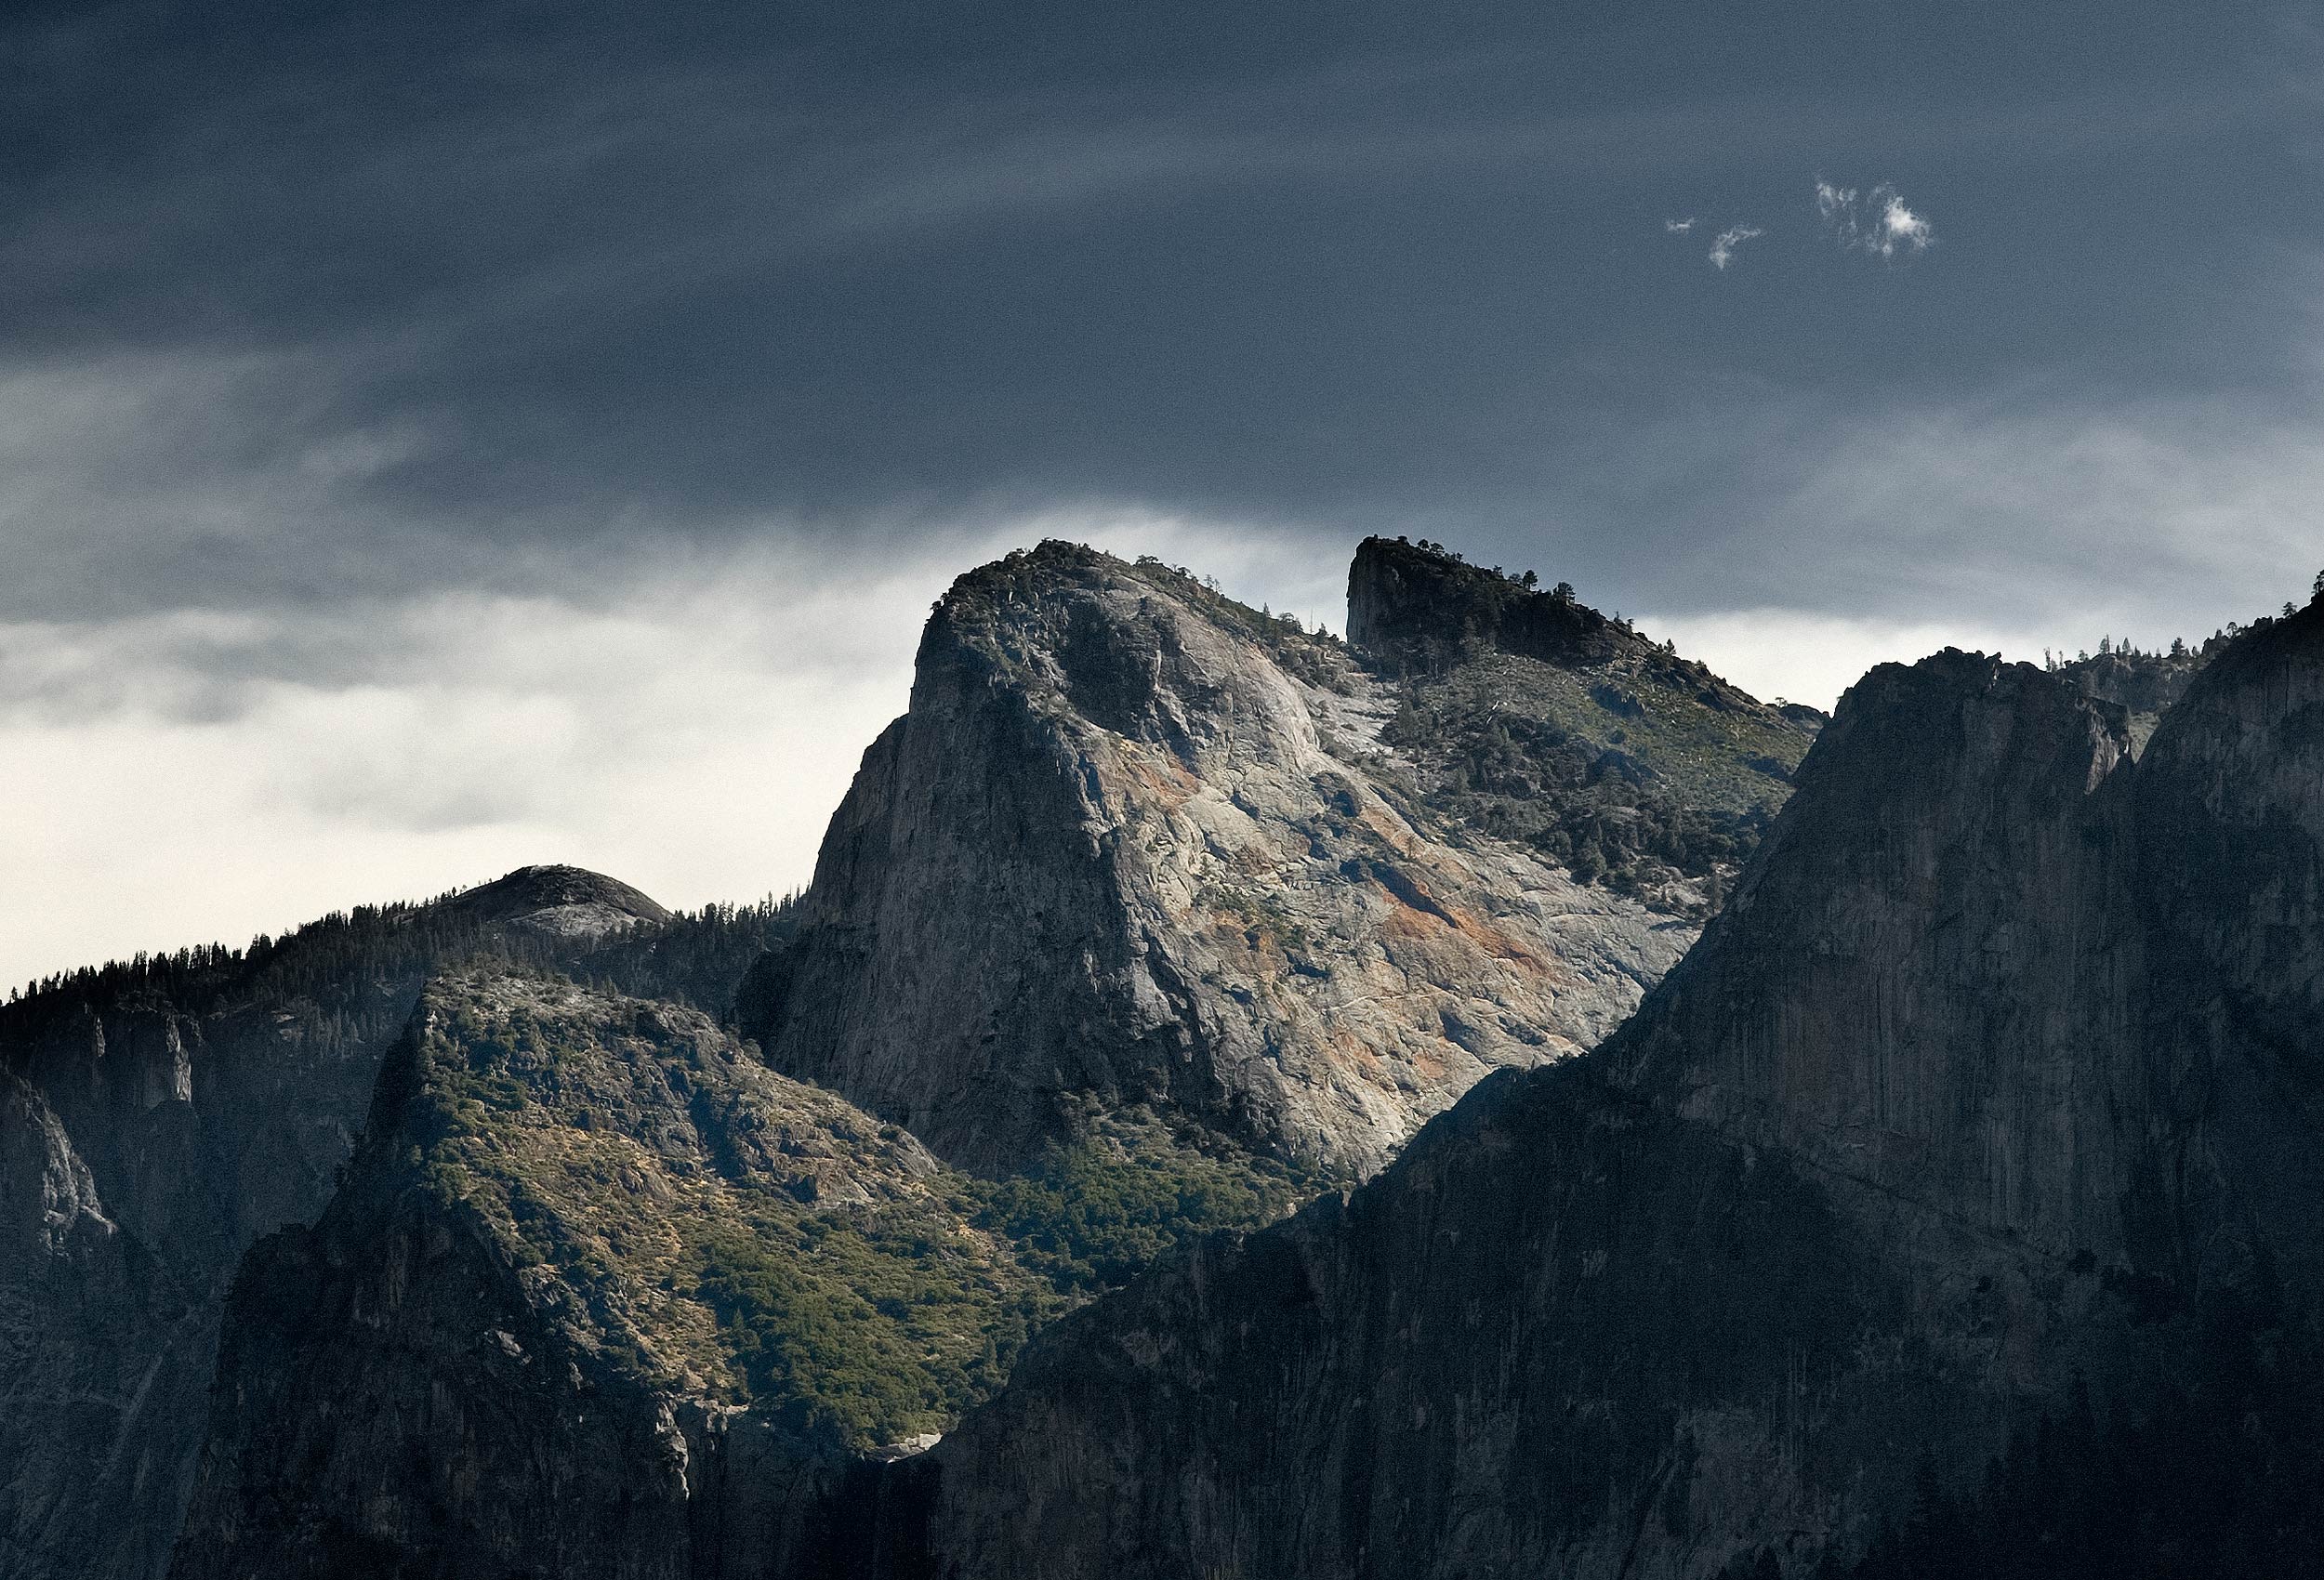 Yosemite by landscape photographer Kristopher Grunert